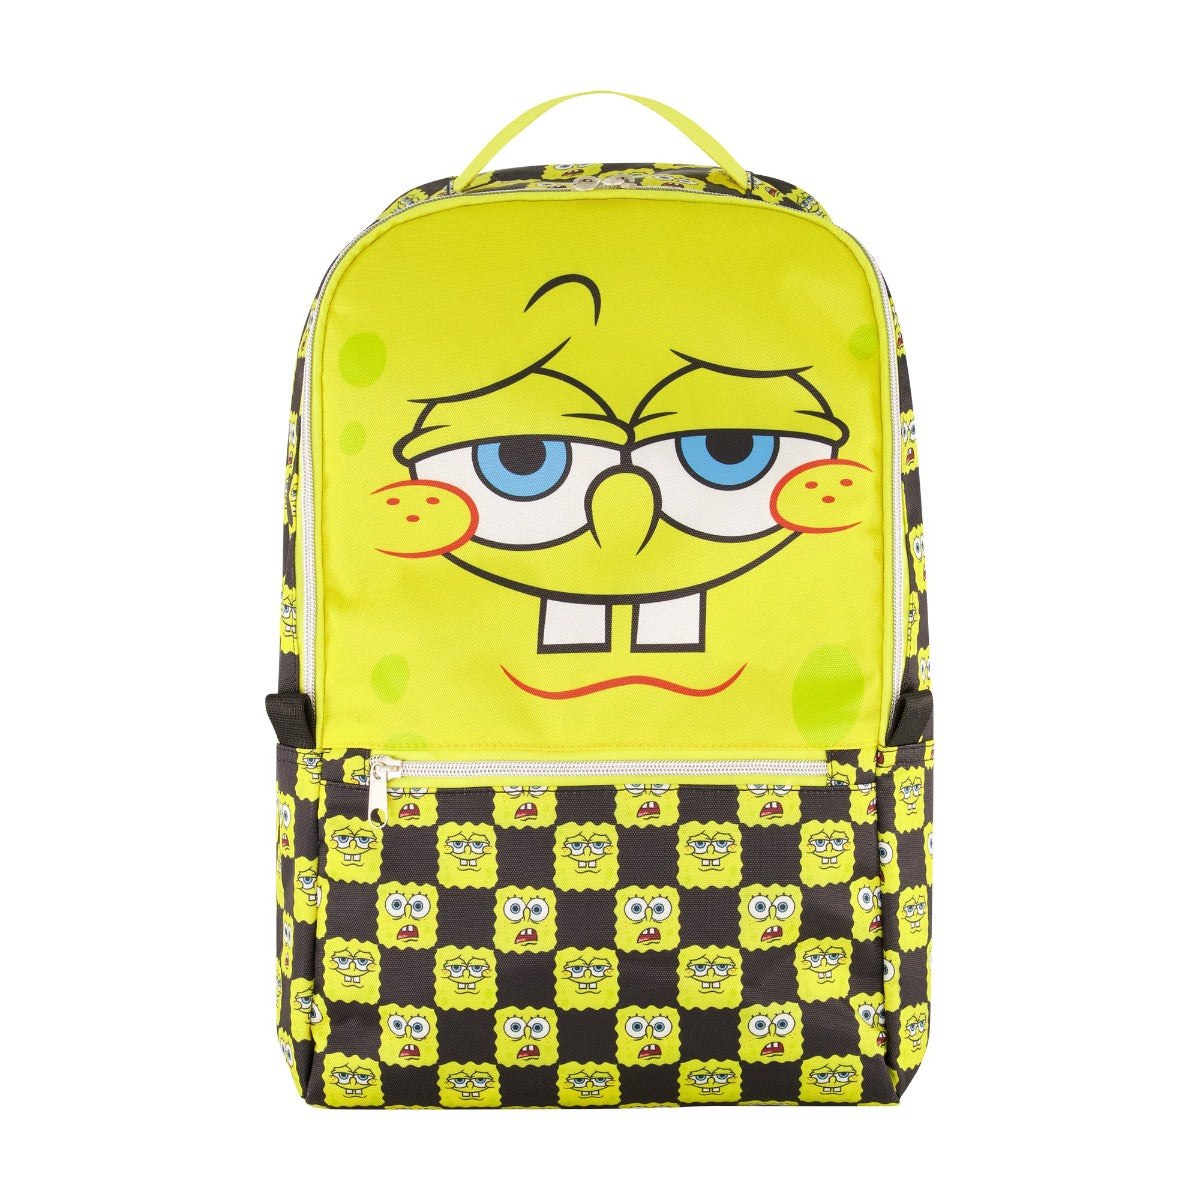 Yellow and black checkered Spongebob Squarepants big face backpack